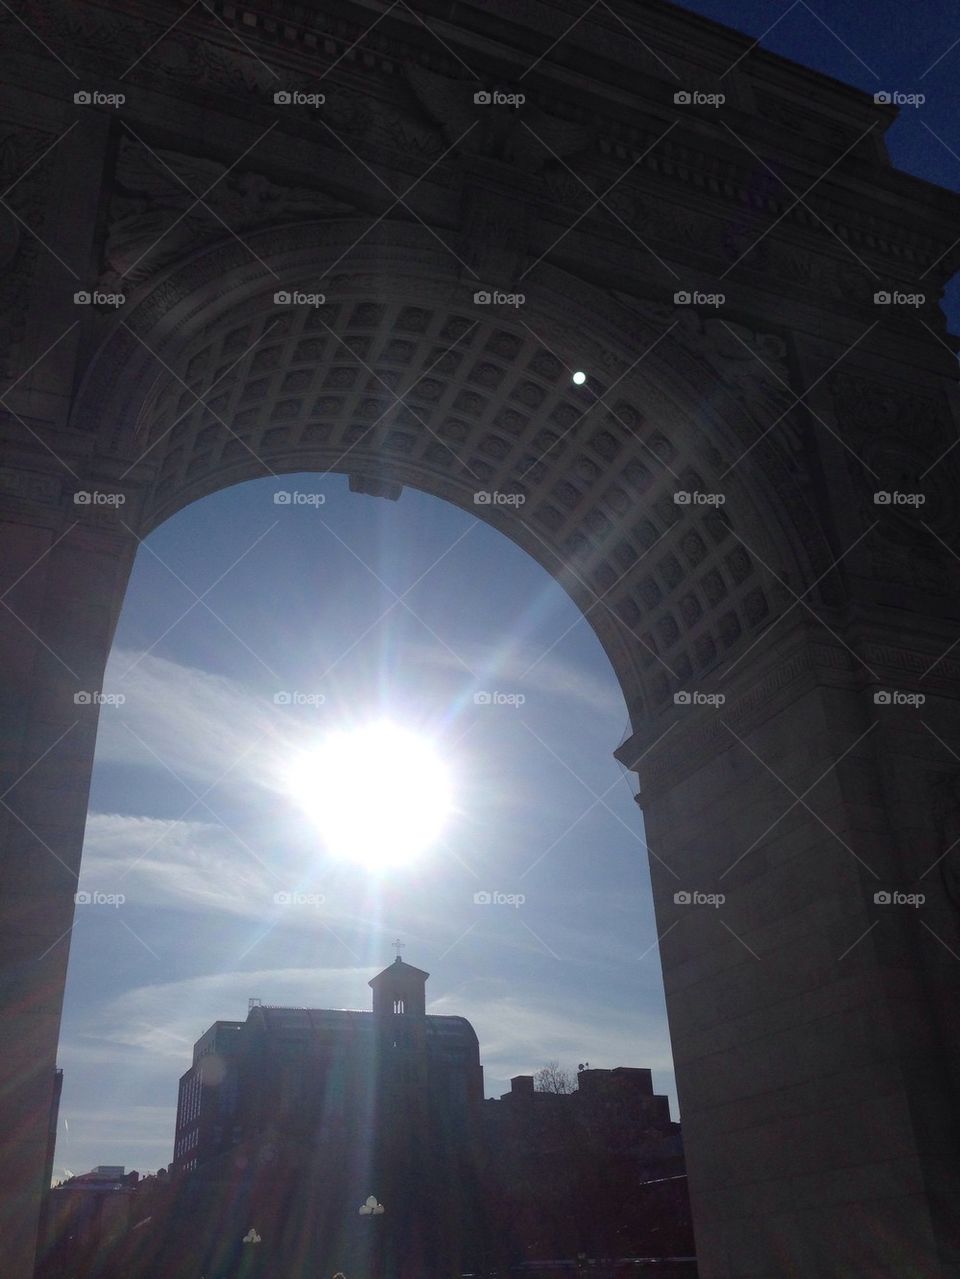 Brilliant day at NYU. The arch at NYU as the sun rises.